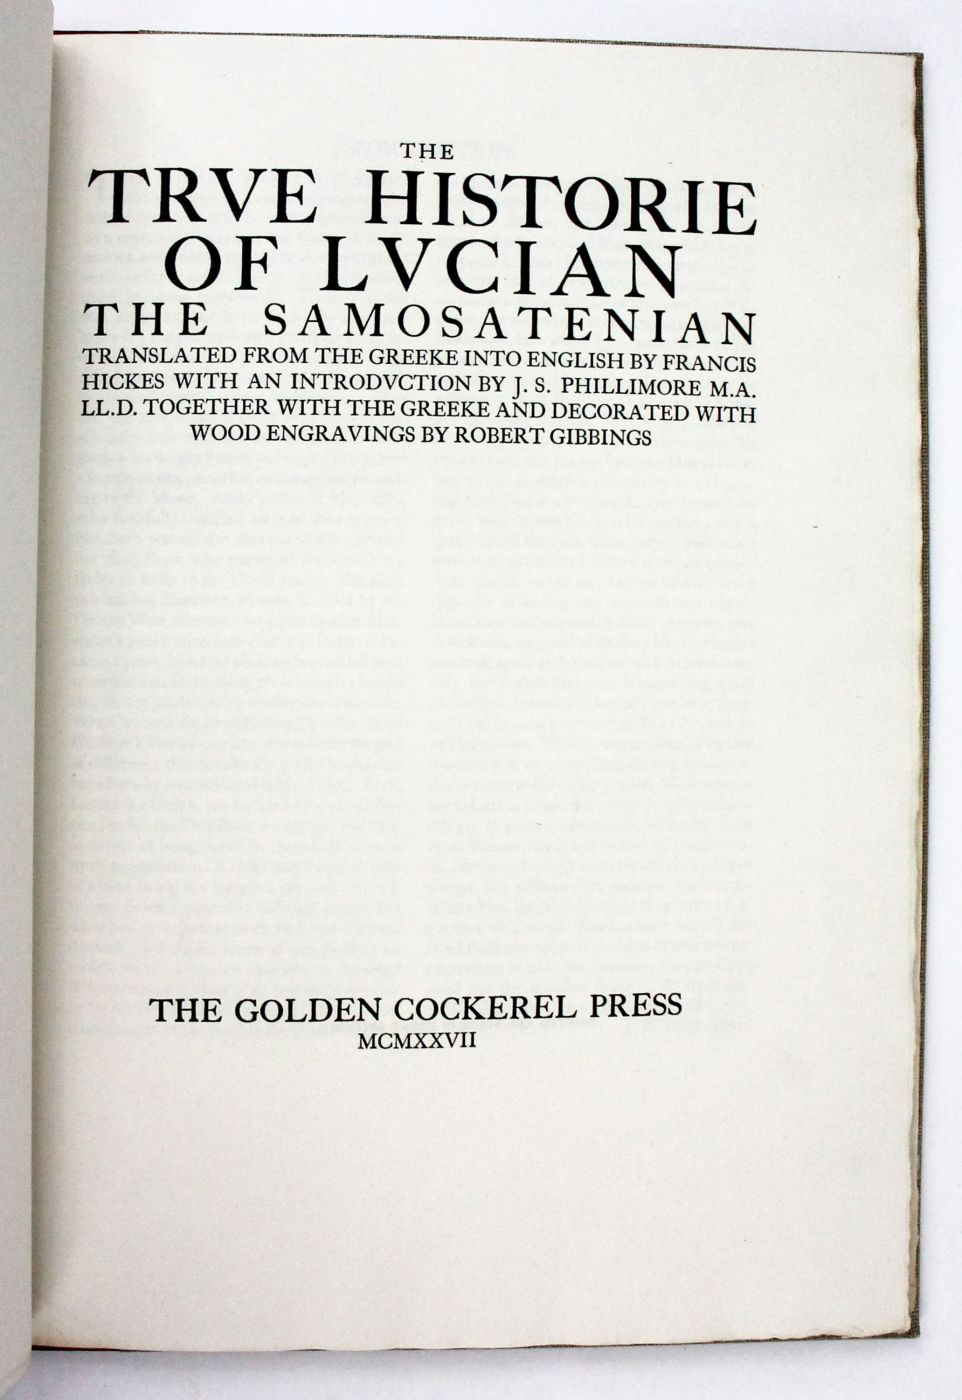 THE TRUE HISTORIE OF LUCIAN THE SAMOSATENIAN -  image 4